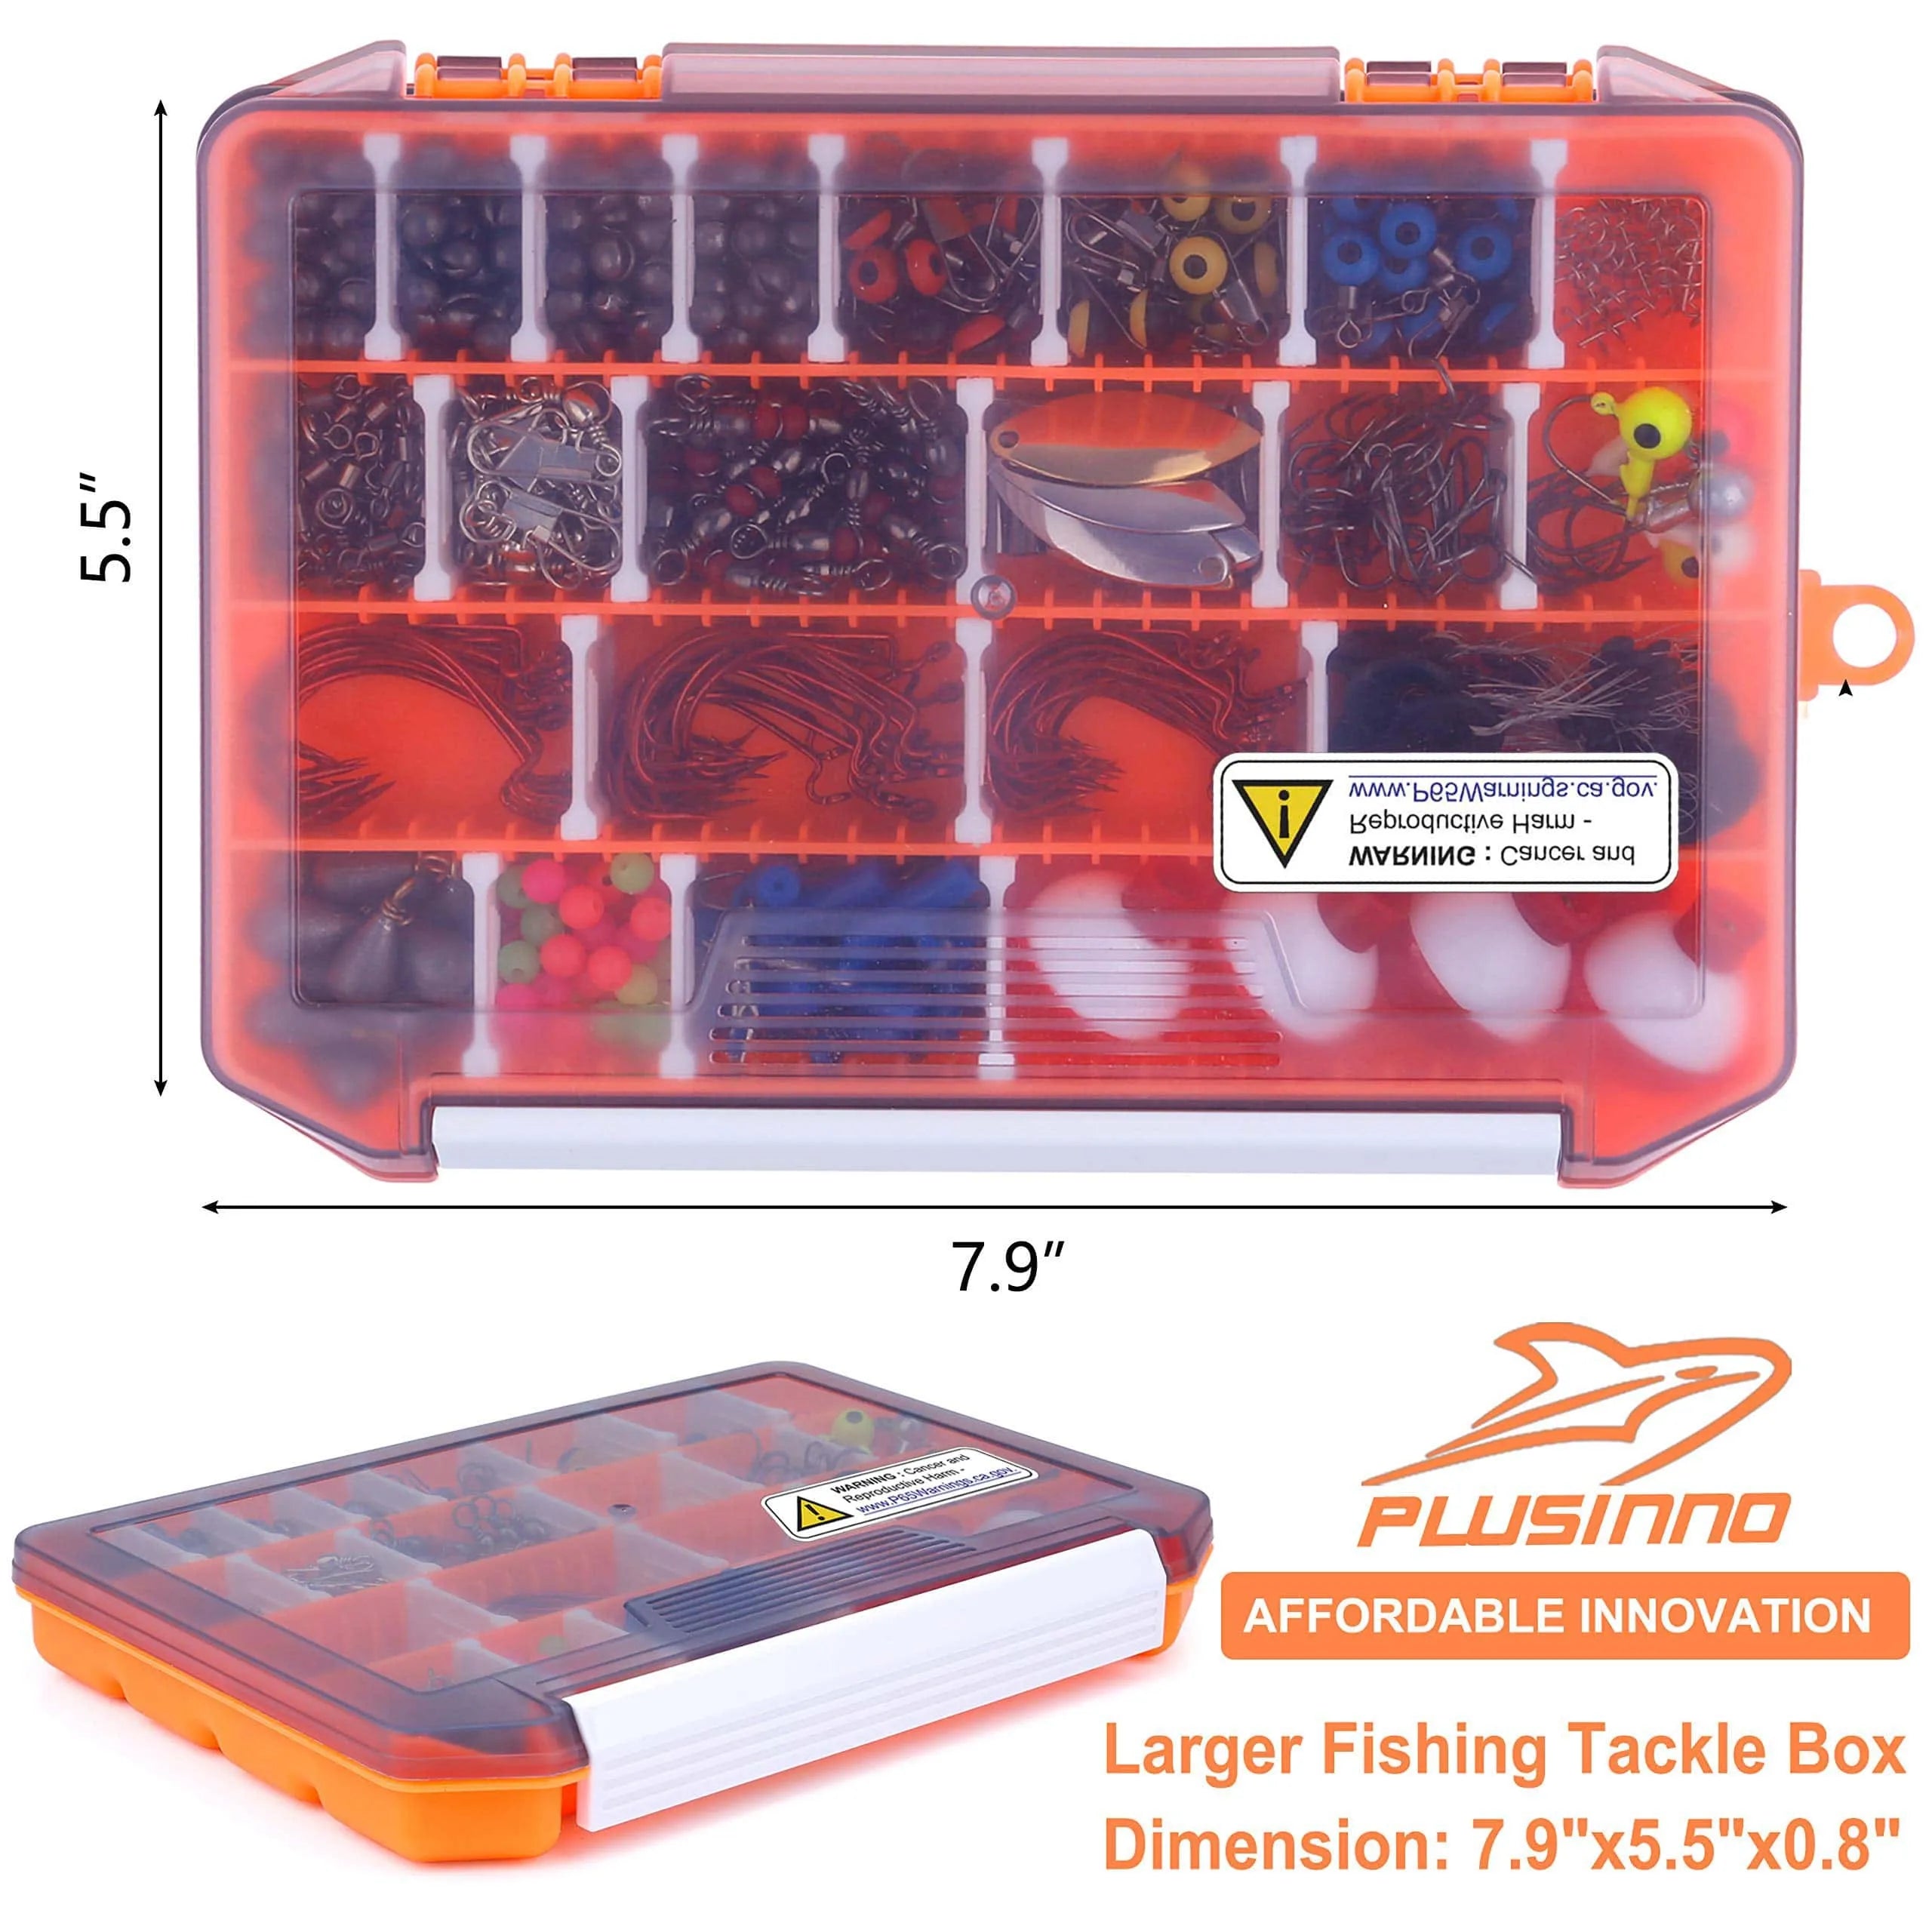 PLUSINNO 397pcs Fishing Accessories Kit Fishing Tackle Box with